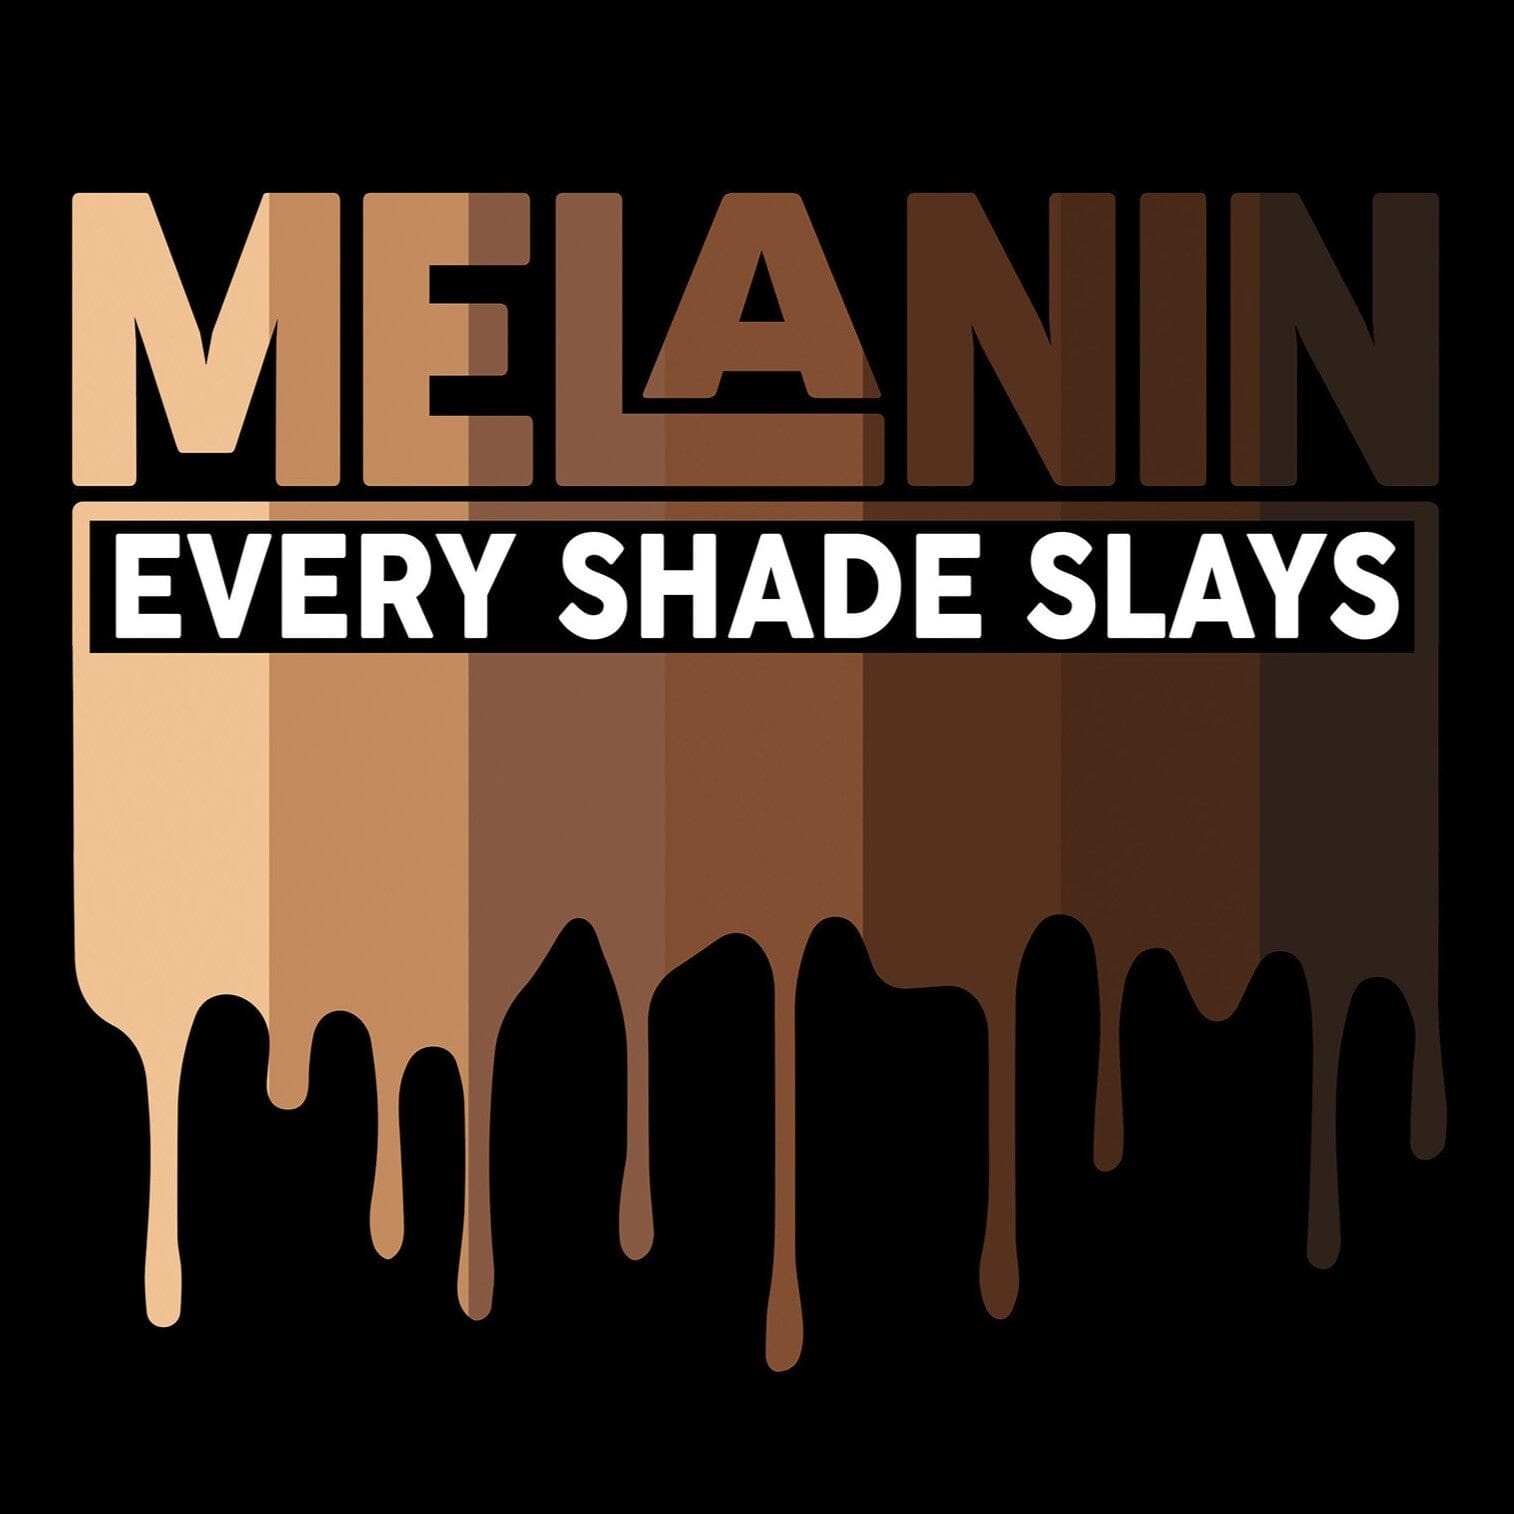 Every Shade Slays Melanin Design